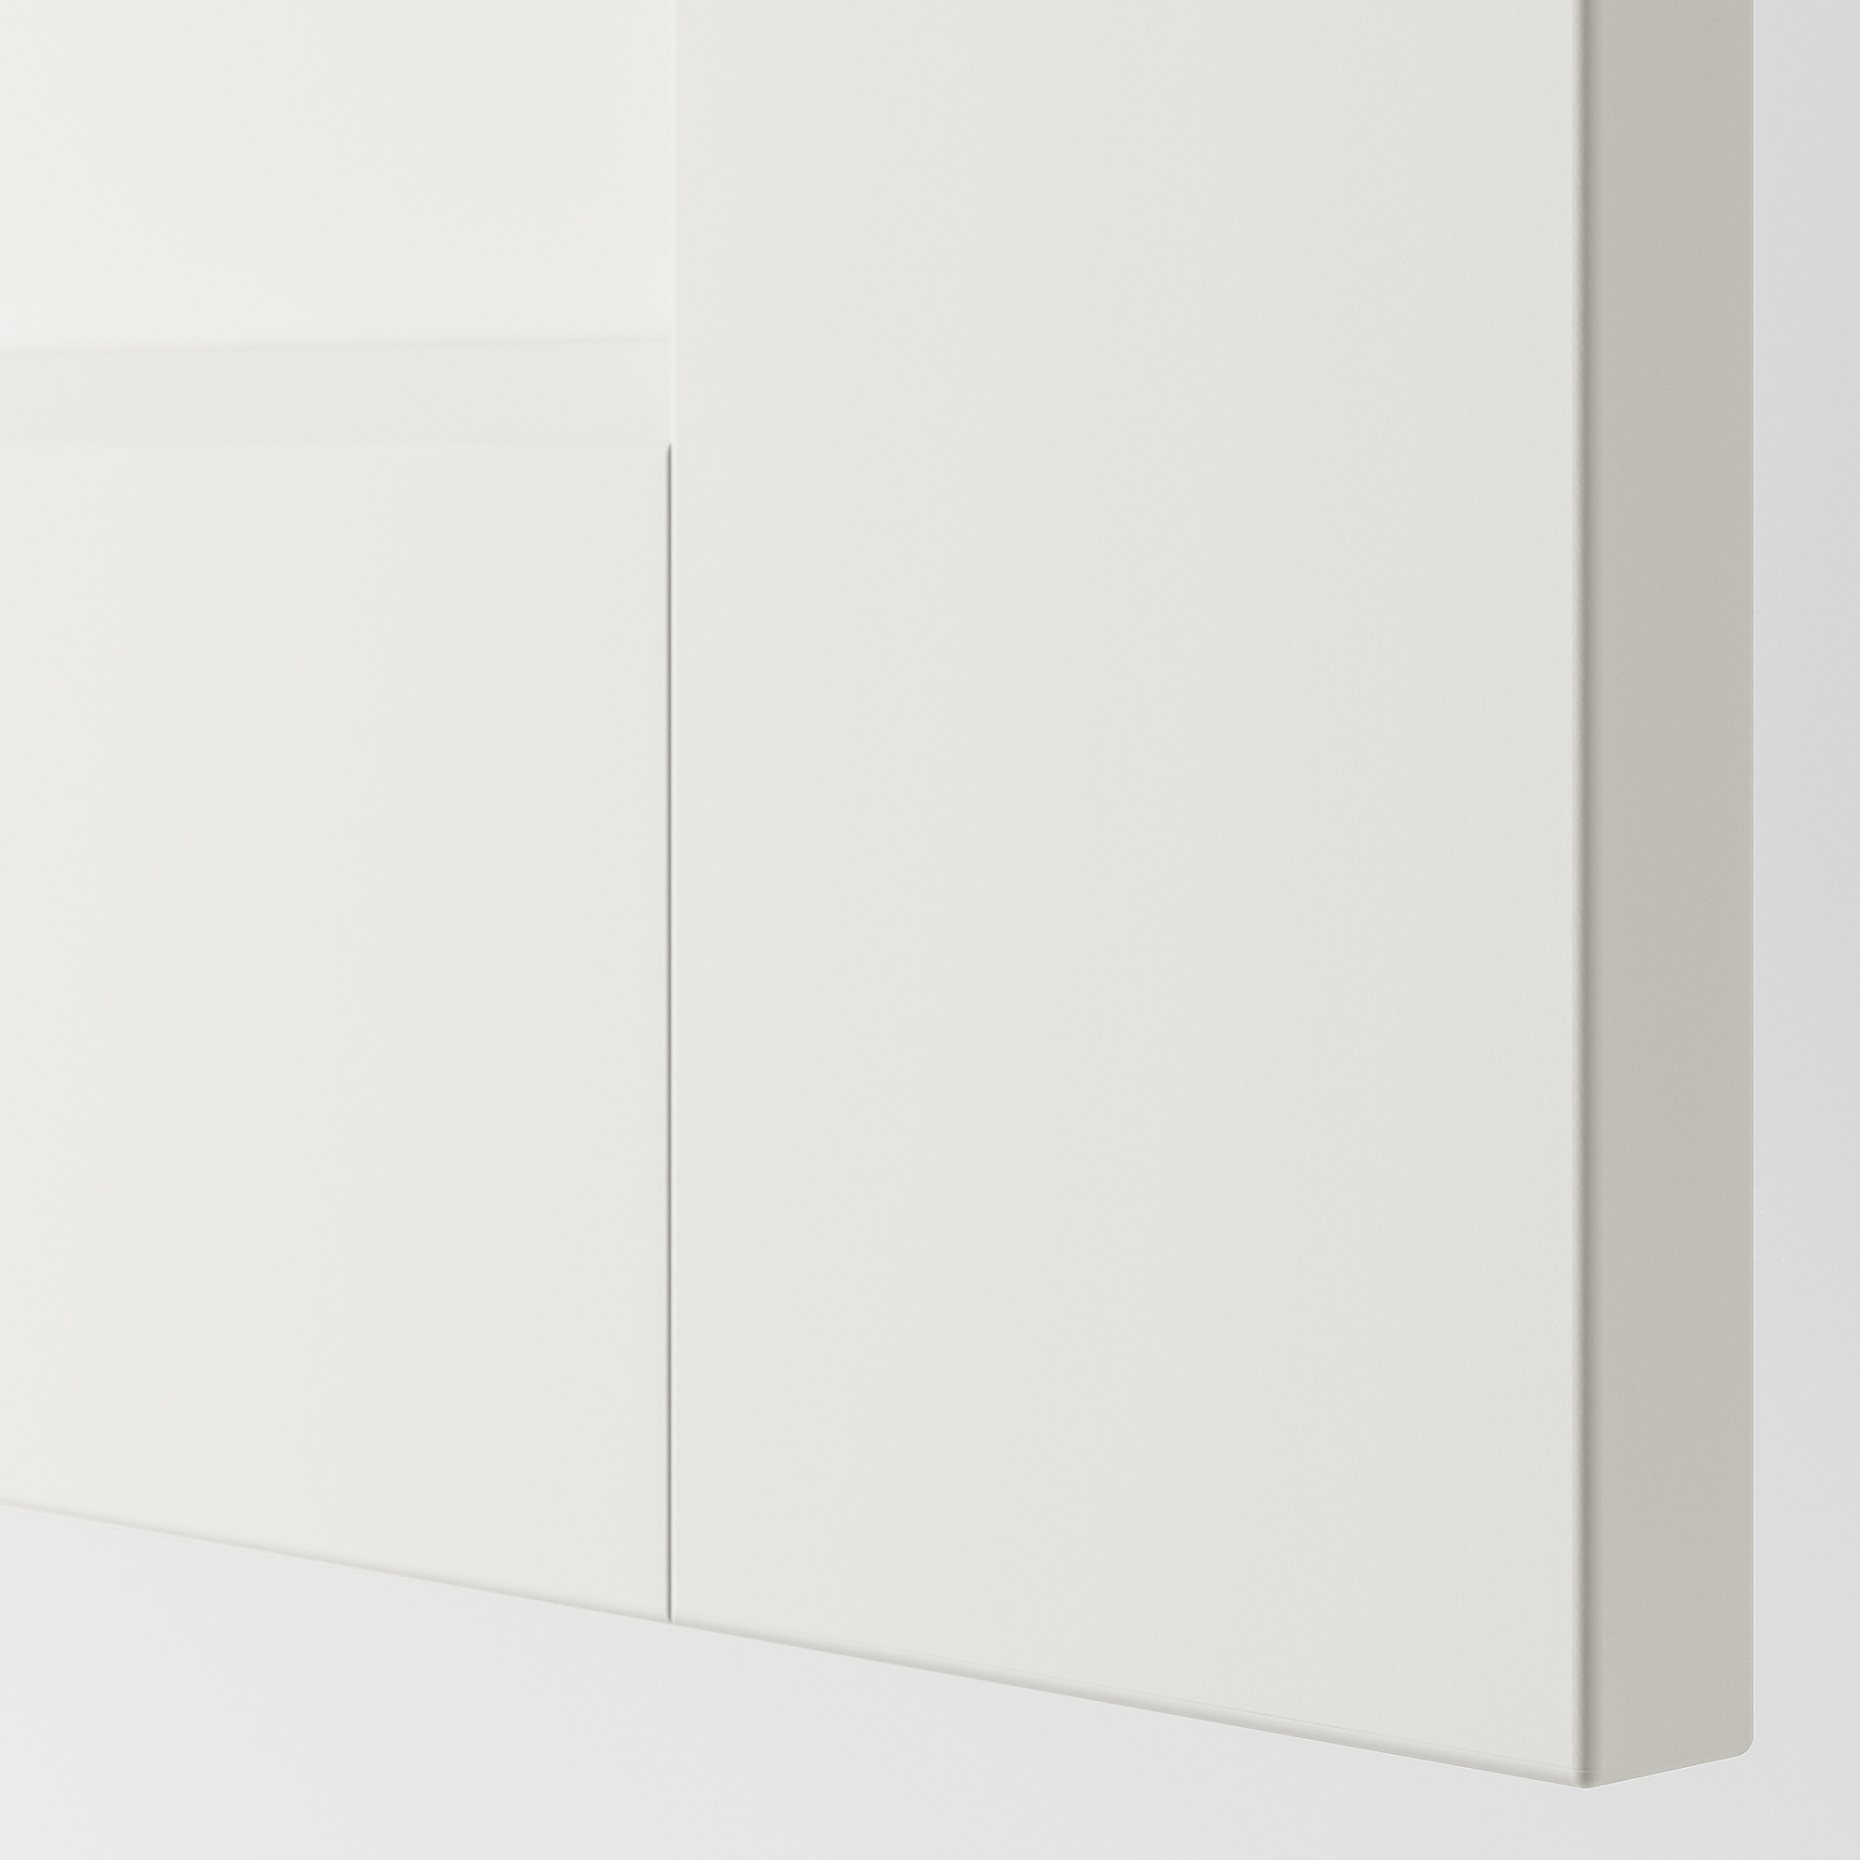 GRIMO, pair of sliding doors, 200x201 cm, 205.215.32